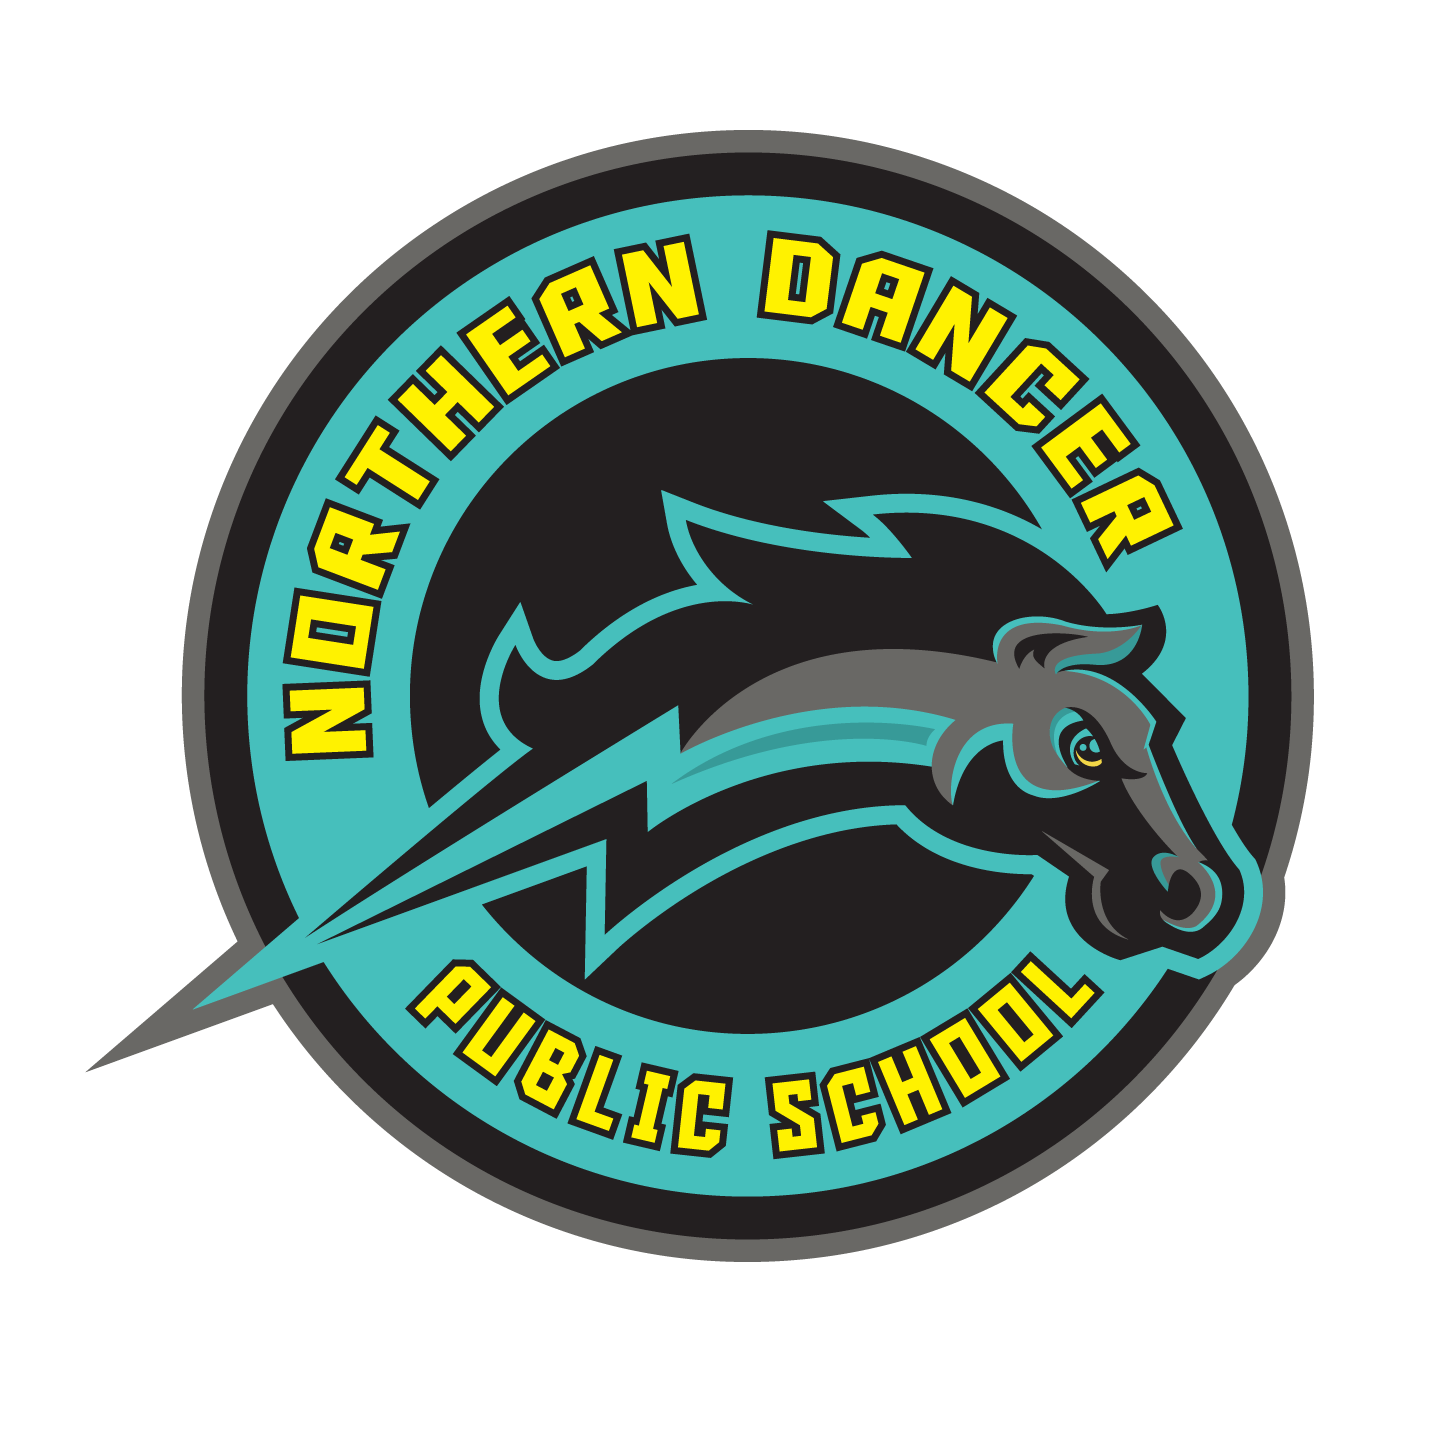 Northern Dancer Public School logo